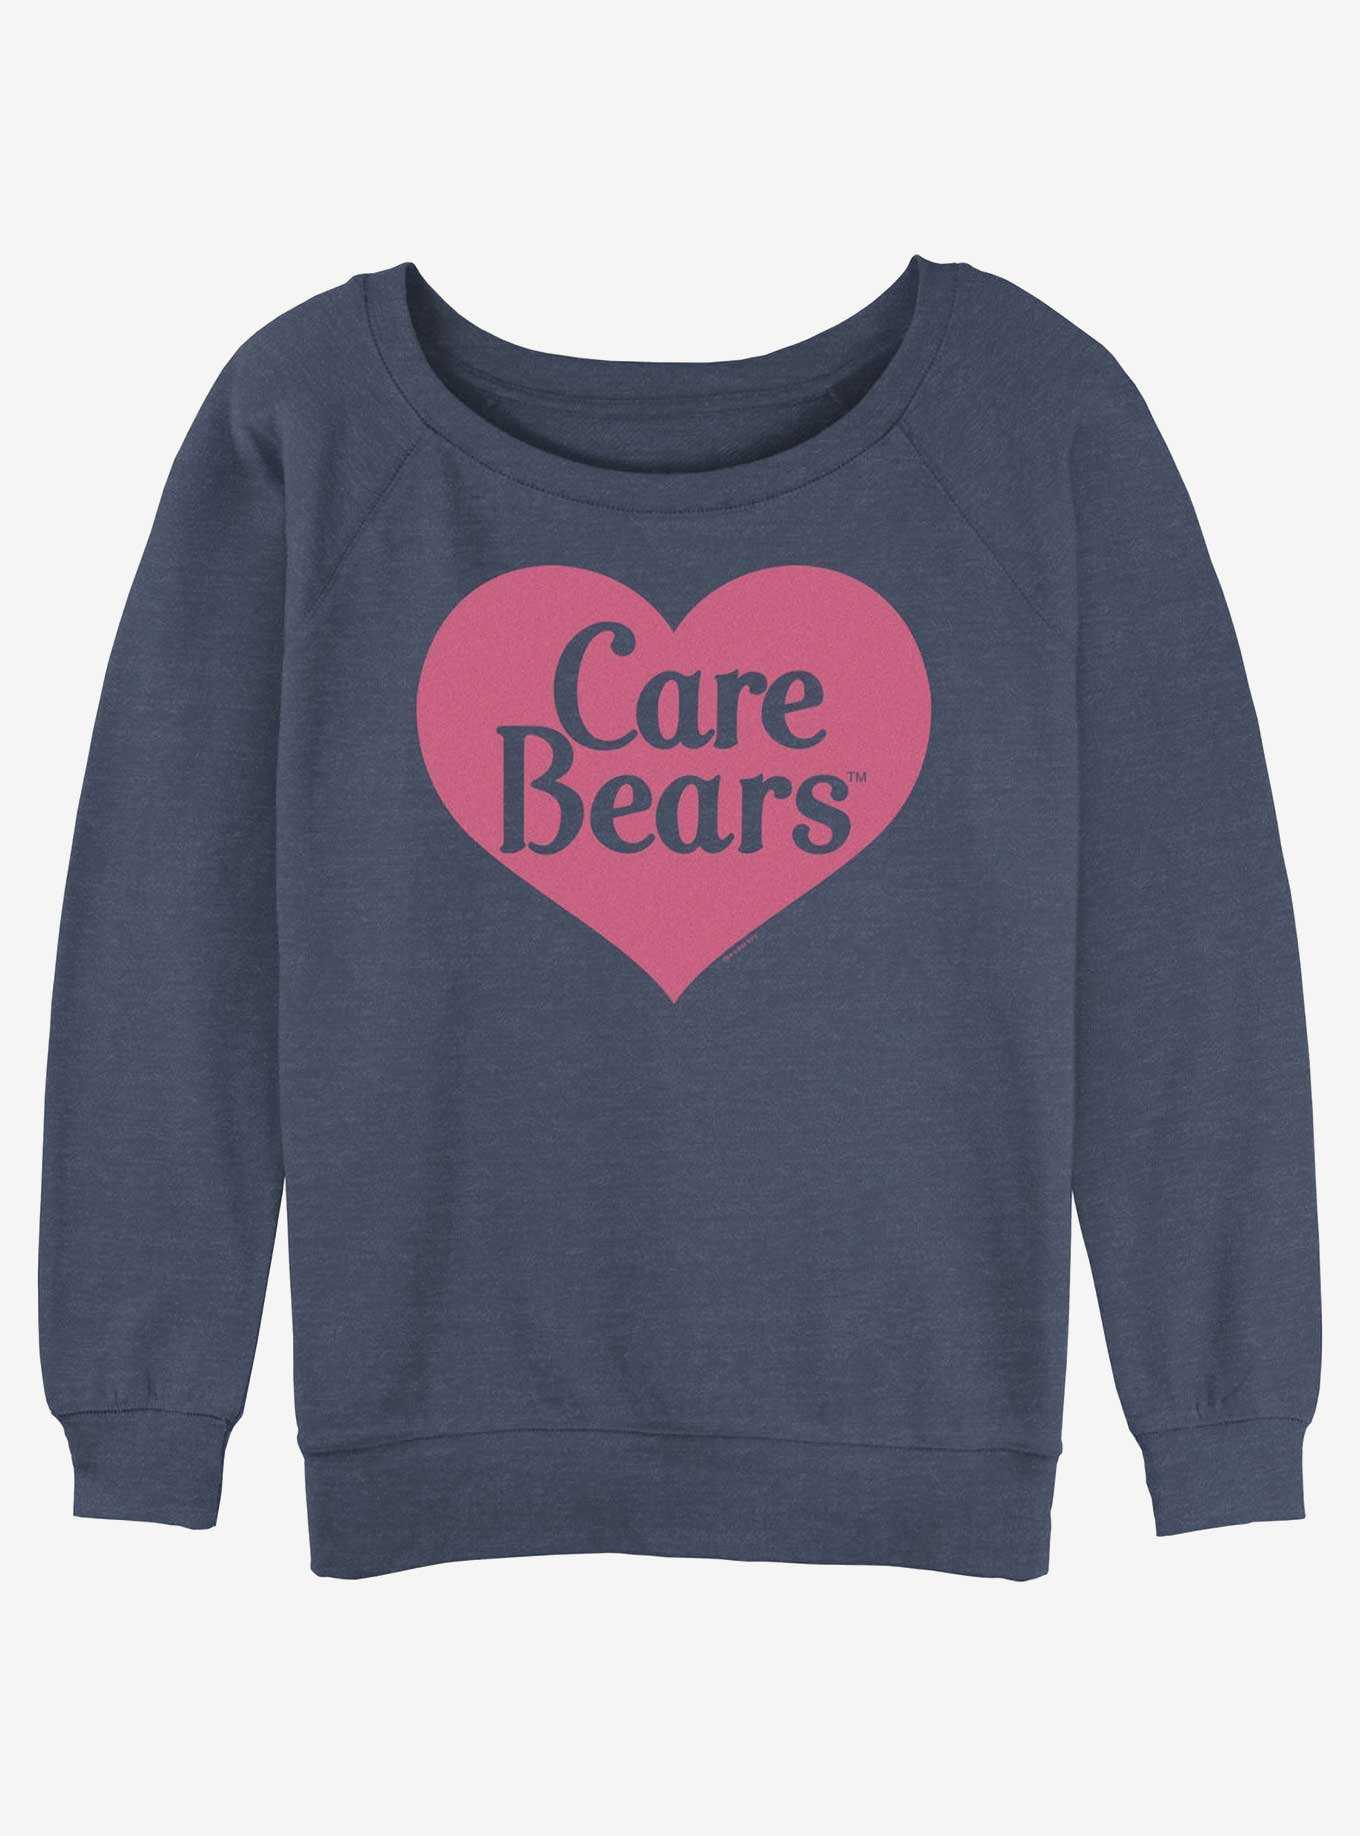 Care Bears Big Heart Girls Slouchy Sweatshirt, , hi-res